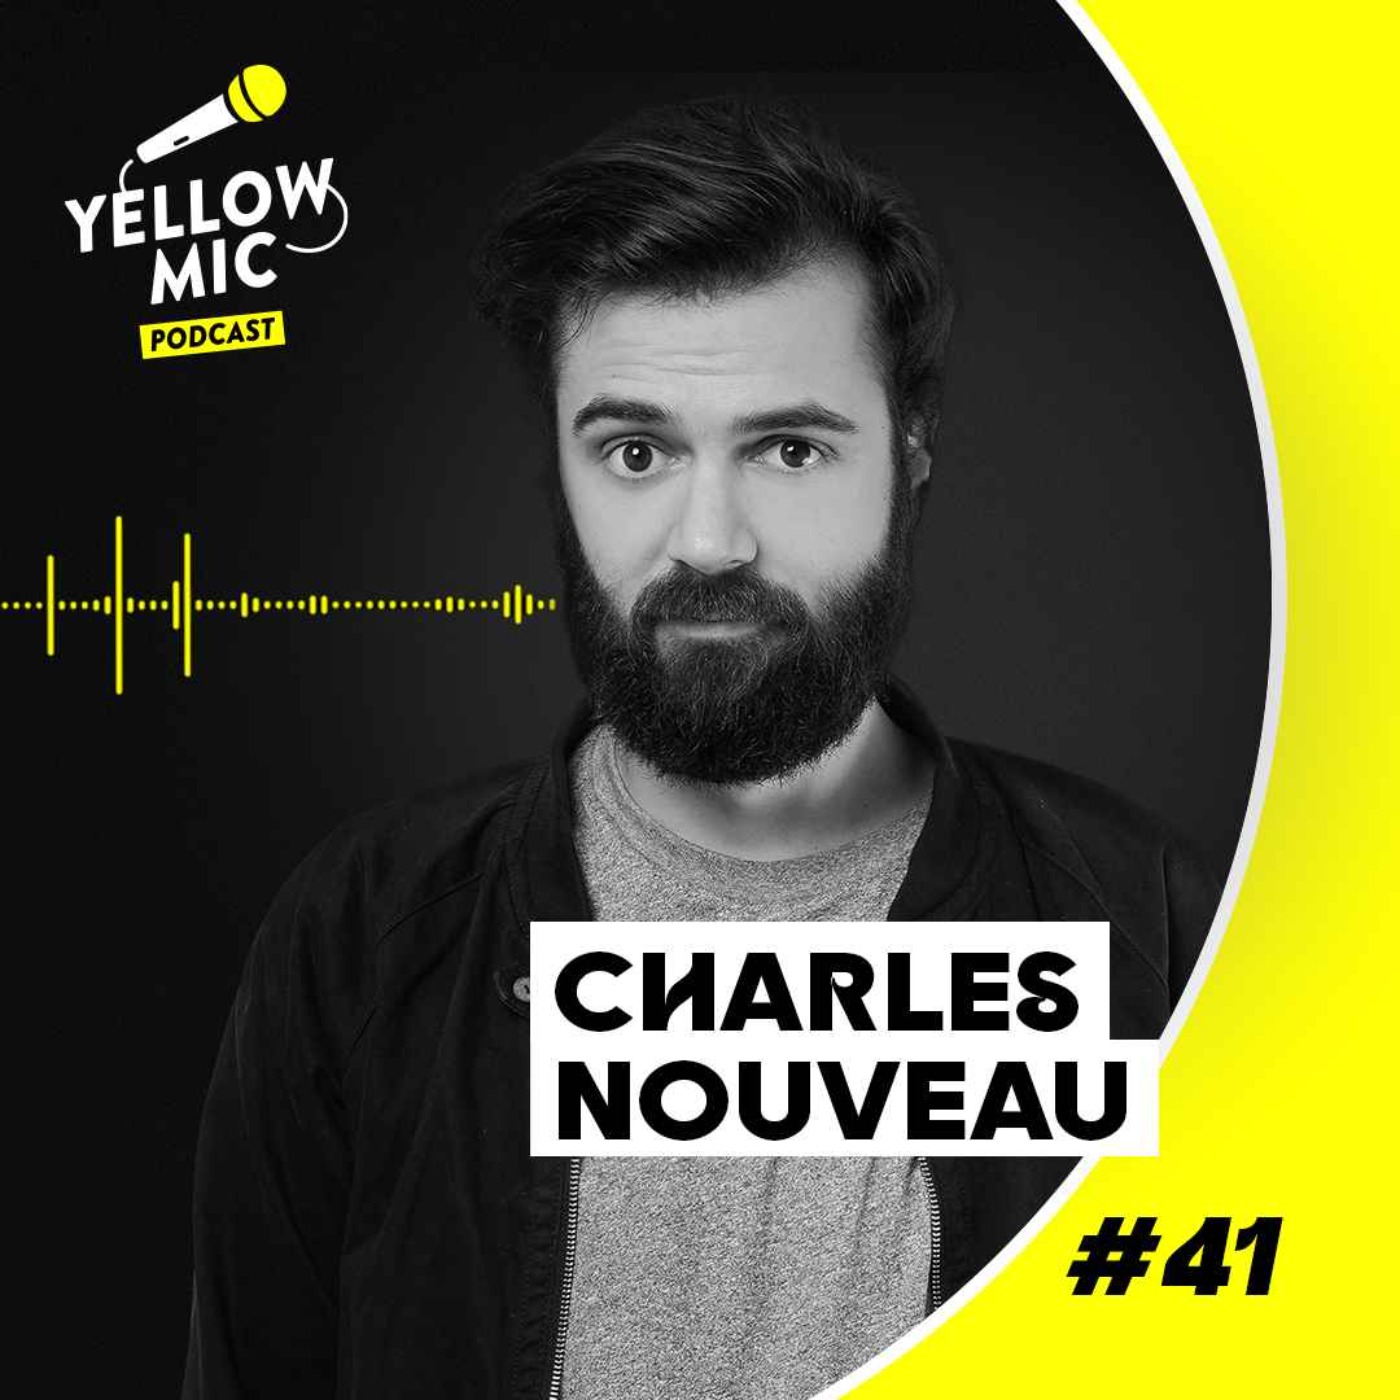 Yellow Mic #41 - Charles Nouveau